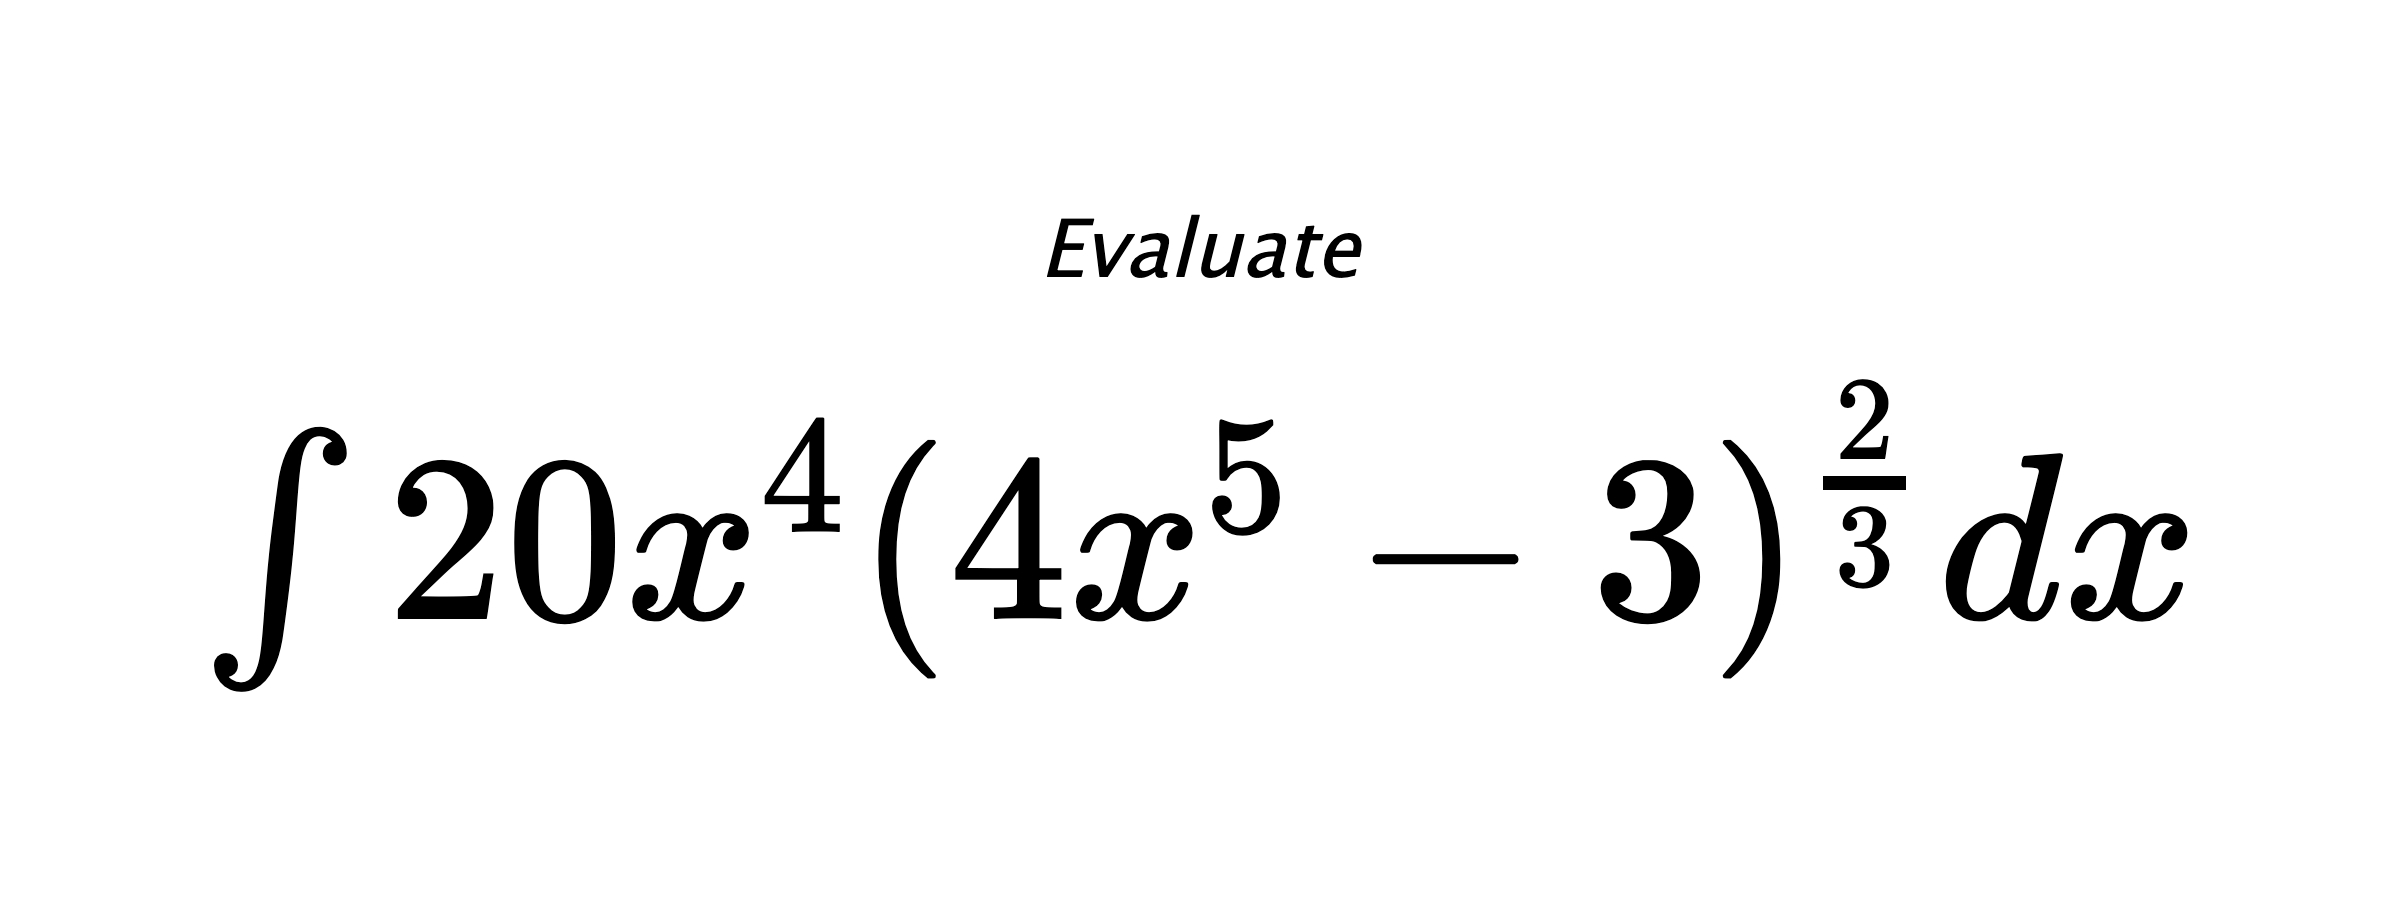 Evaluate $ \int{20x^4(4x^5-3)^{\frac{2}{3}}}dx $